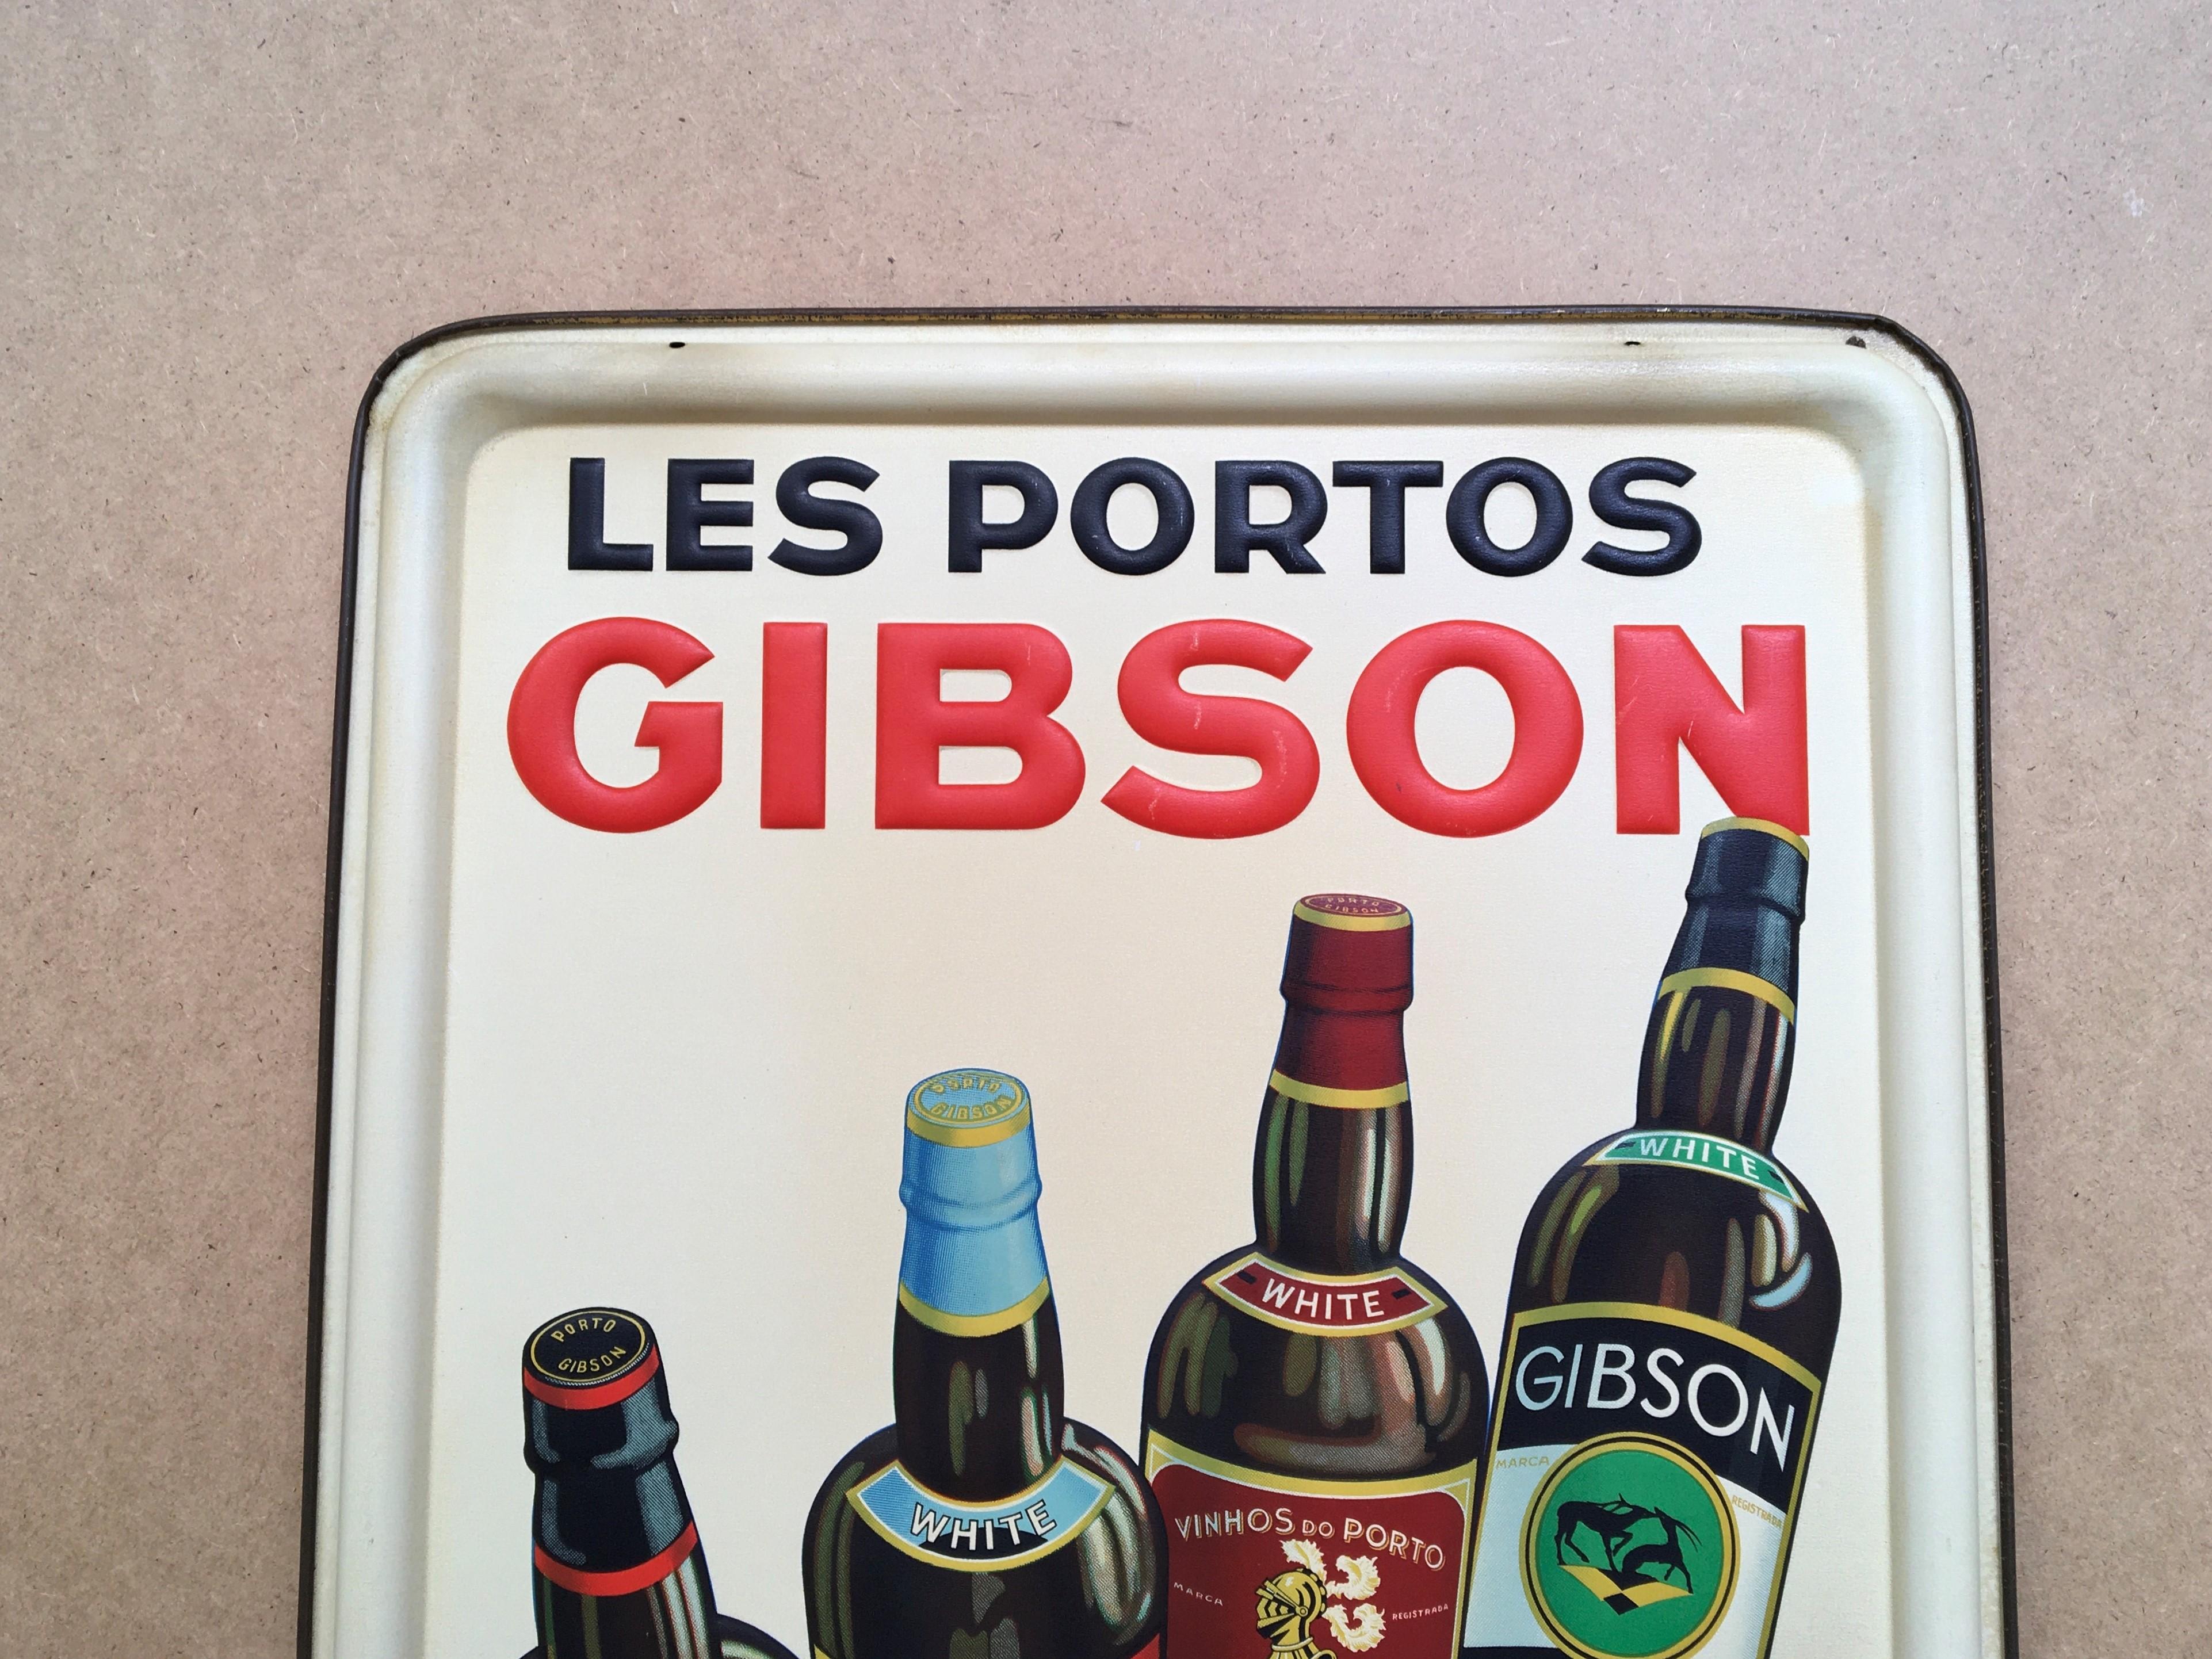 Art Deco 1936 Port Sign, Les Portos Gibson, an Appetizer Drink For Sale